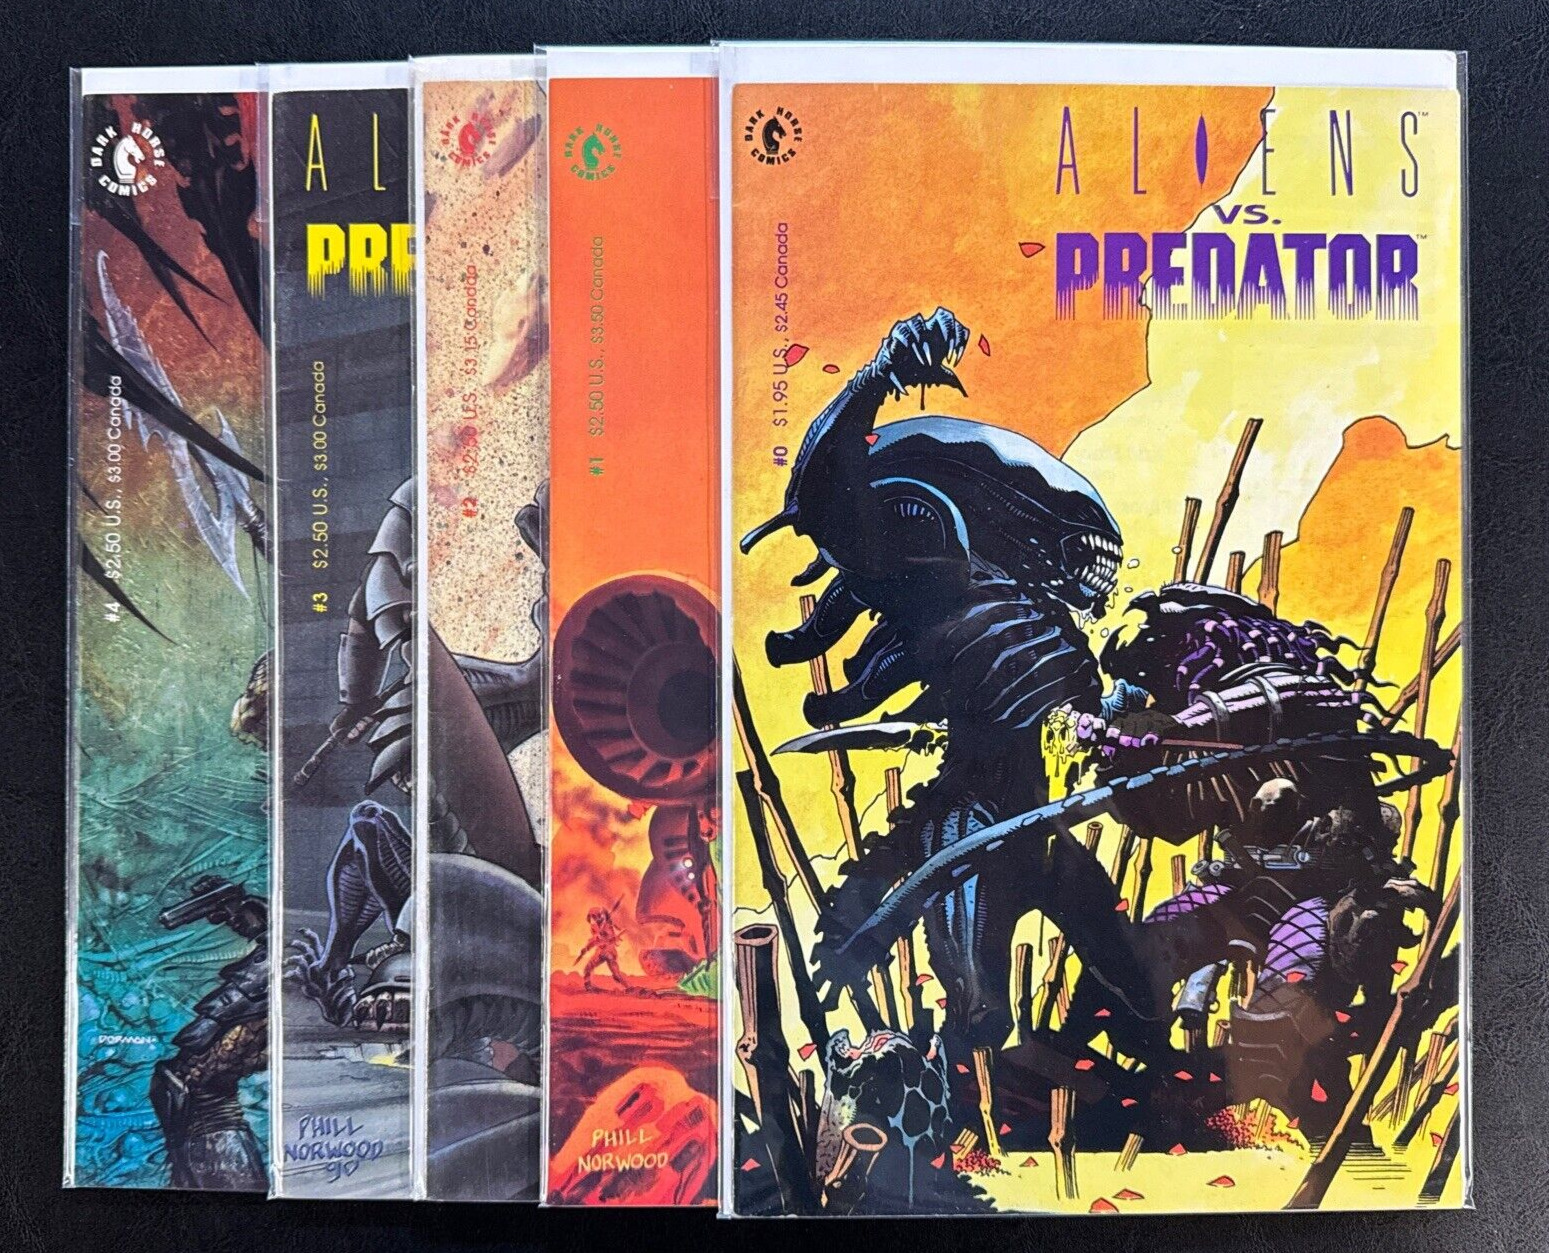 Aliens vs Predator #0-4 Dark Horse 1990 Lot of 5 Comics Complete Set